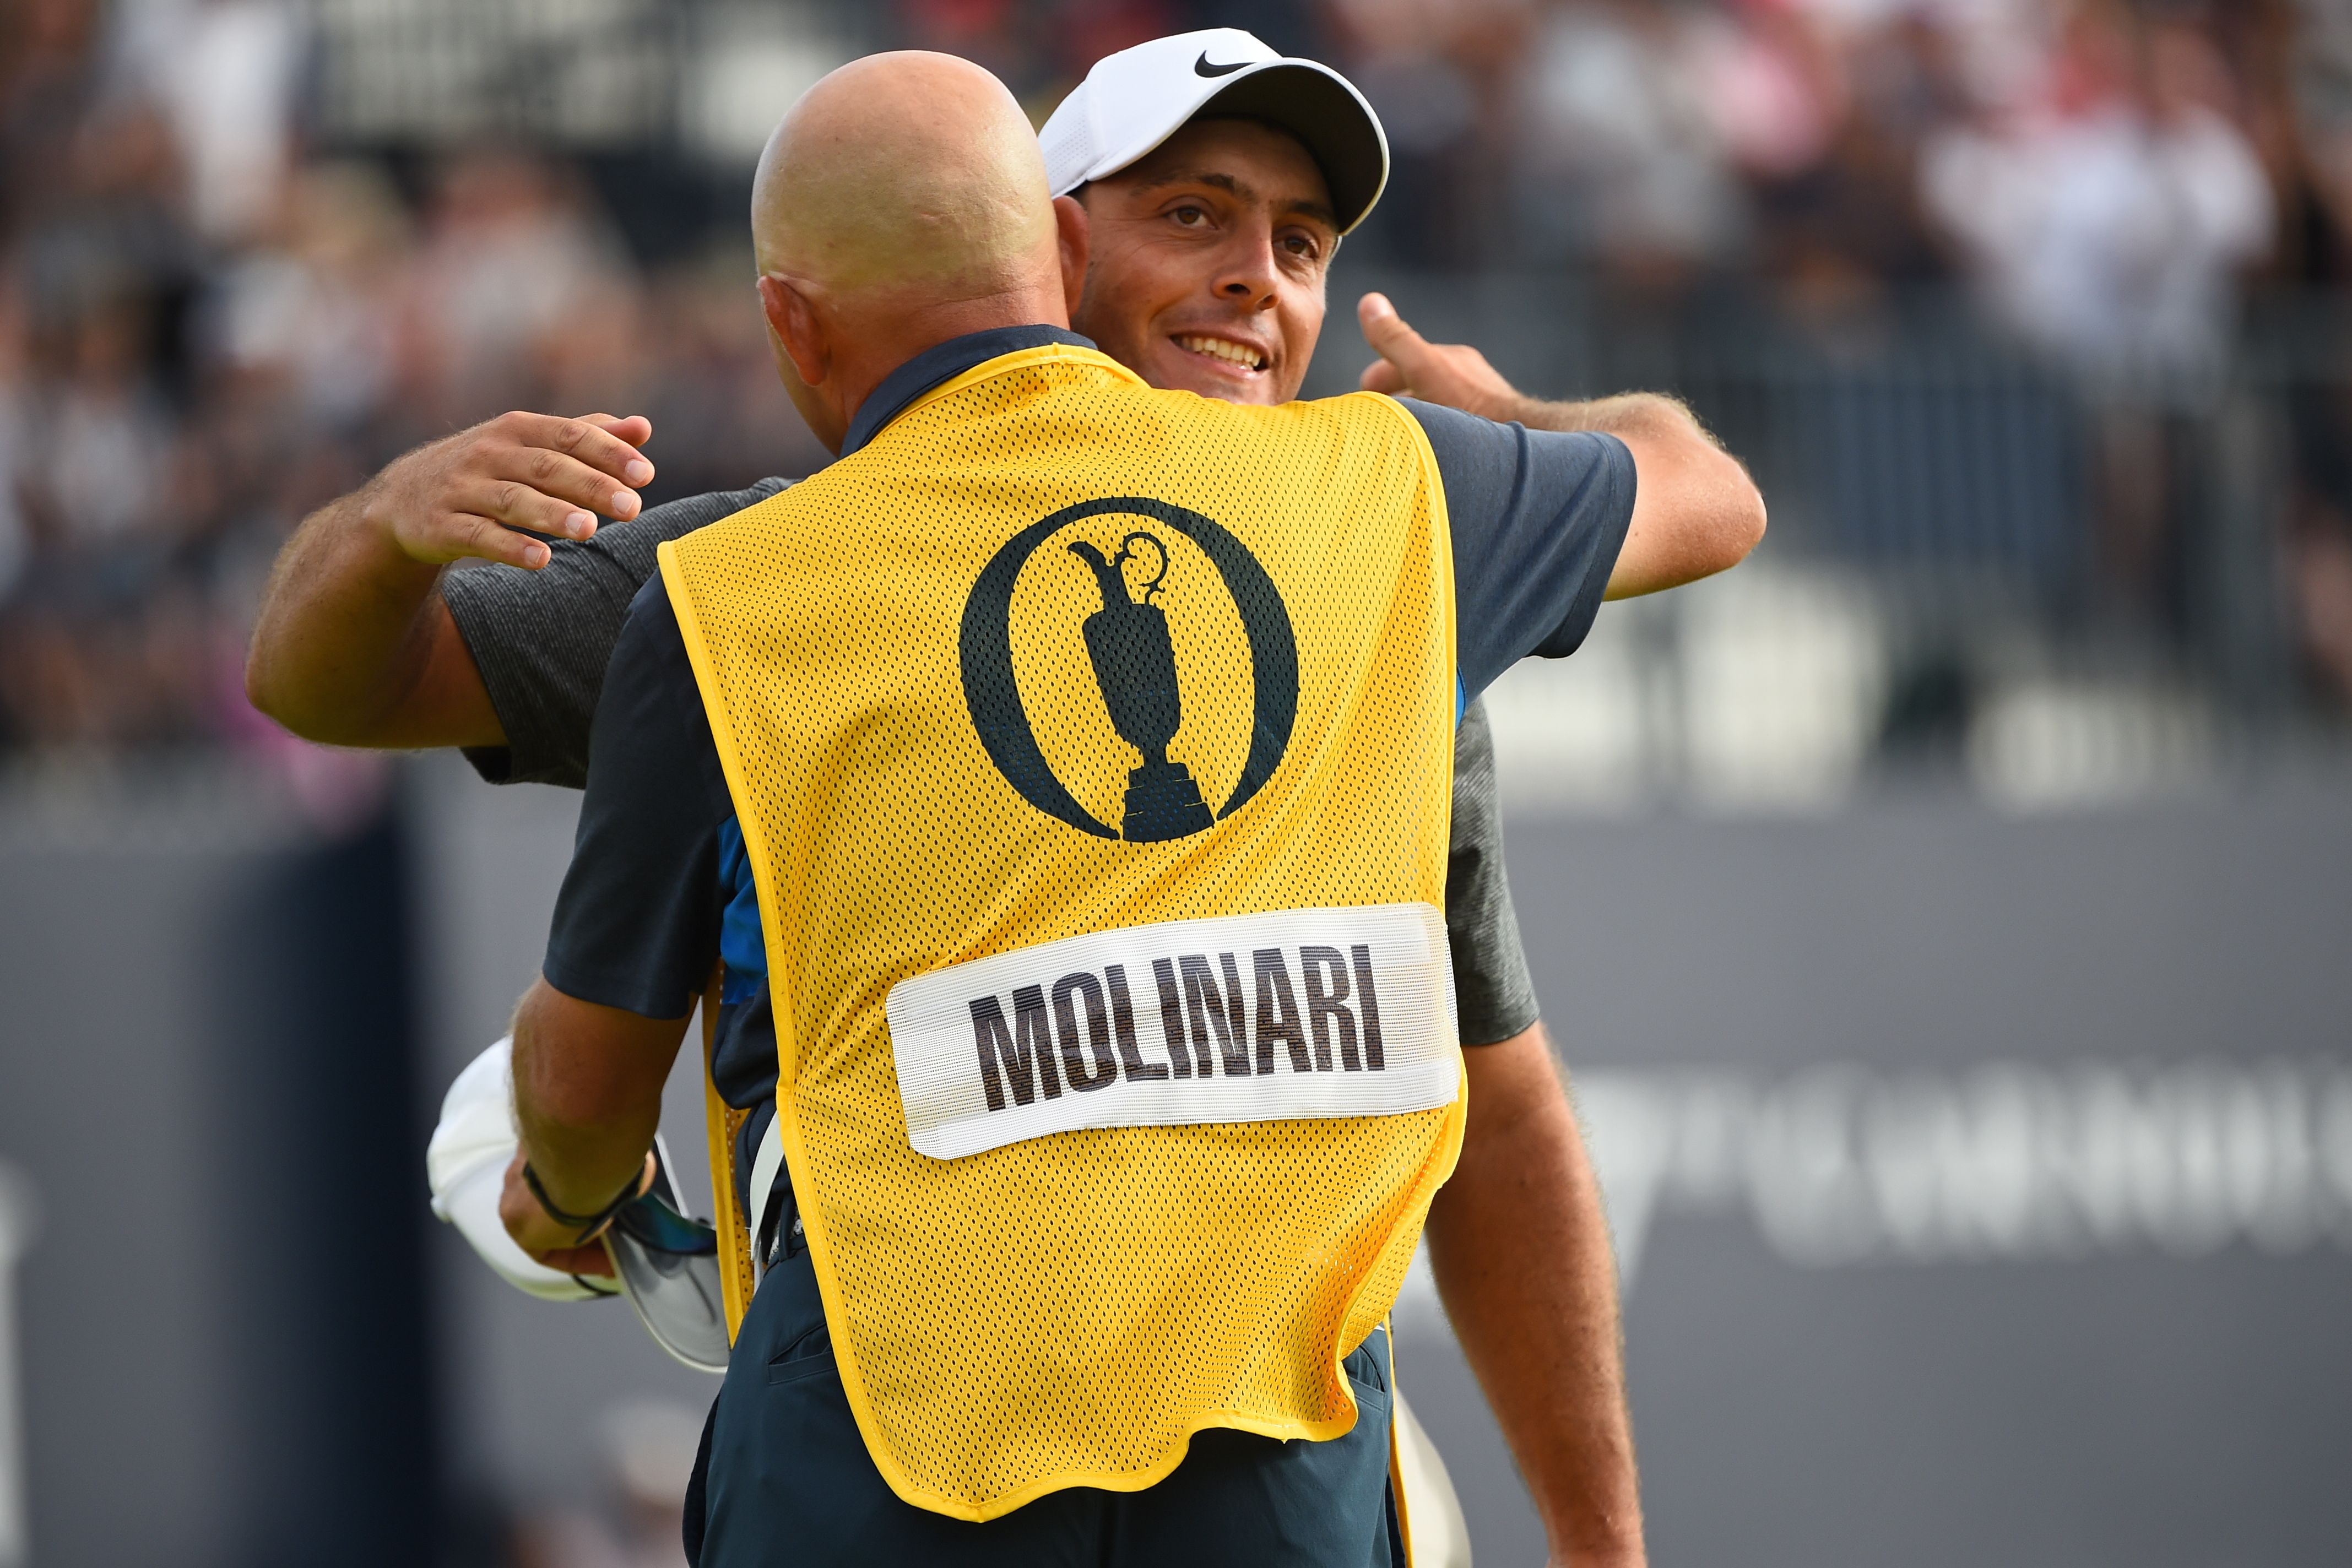 Francesco Molinari: in the bag of the 2018 Open champion